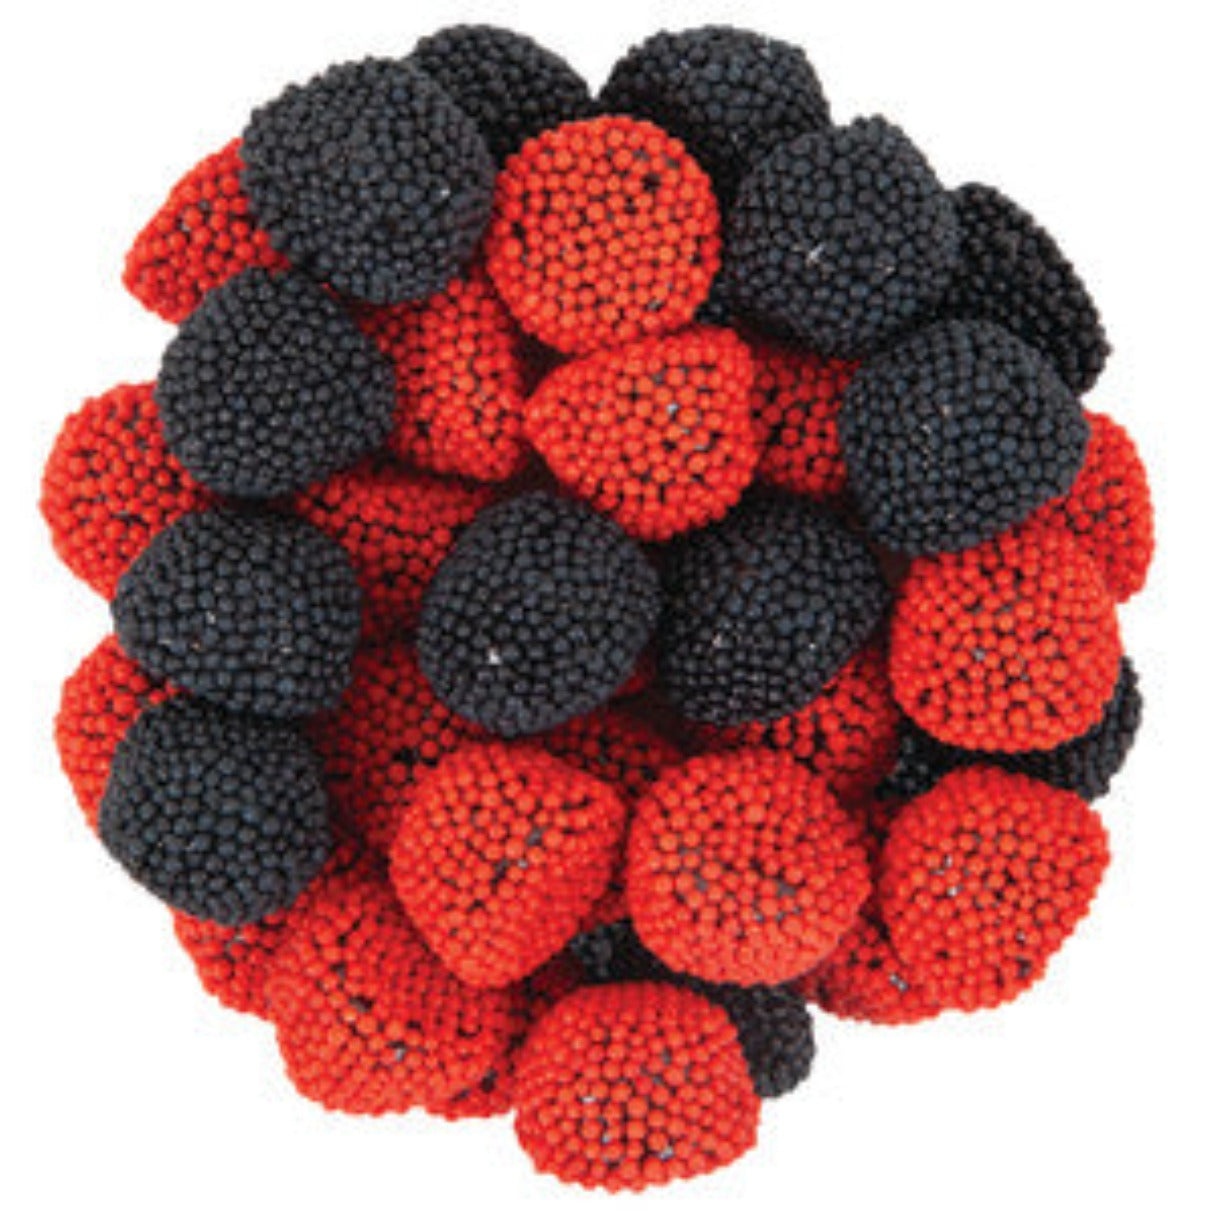 Gerrit's Red & Black Raspberries Candy Bag - 4.4lb